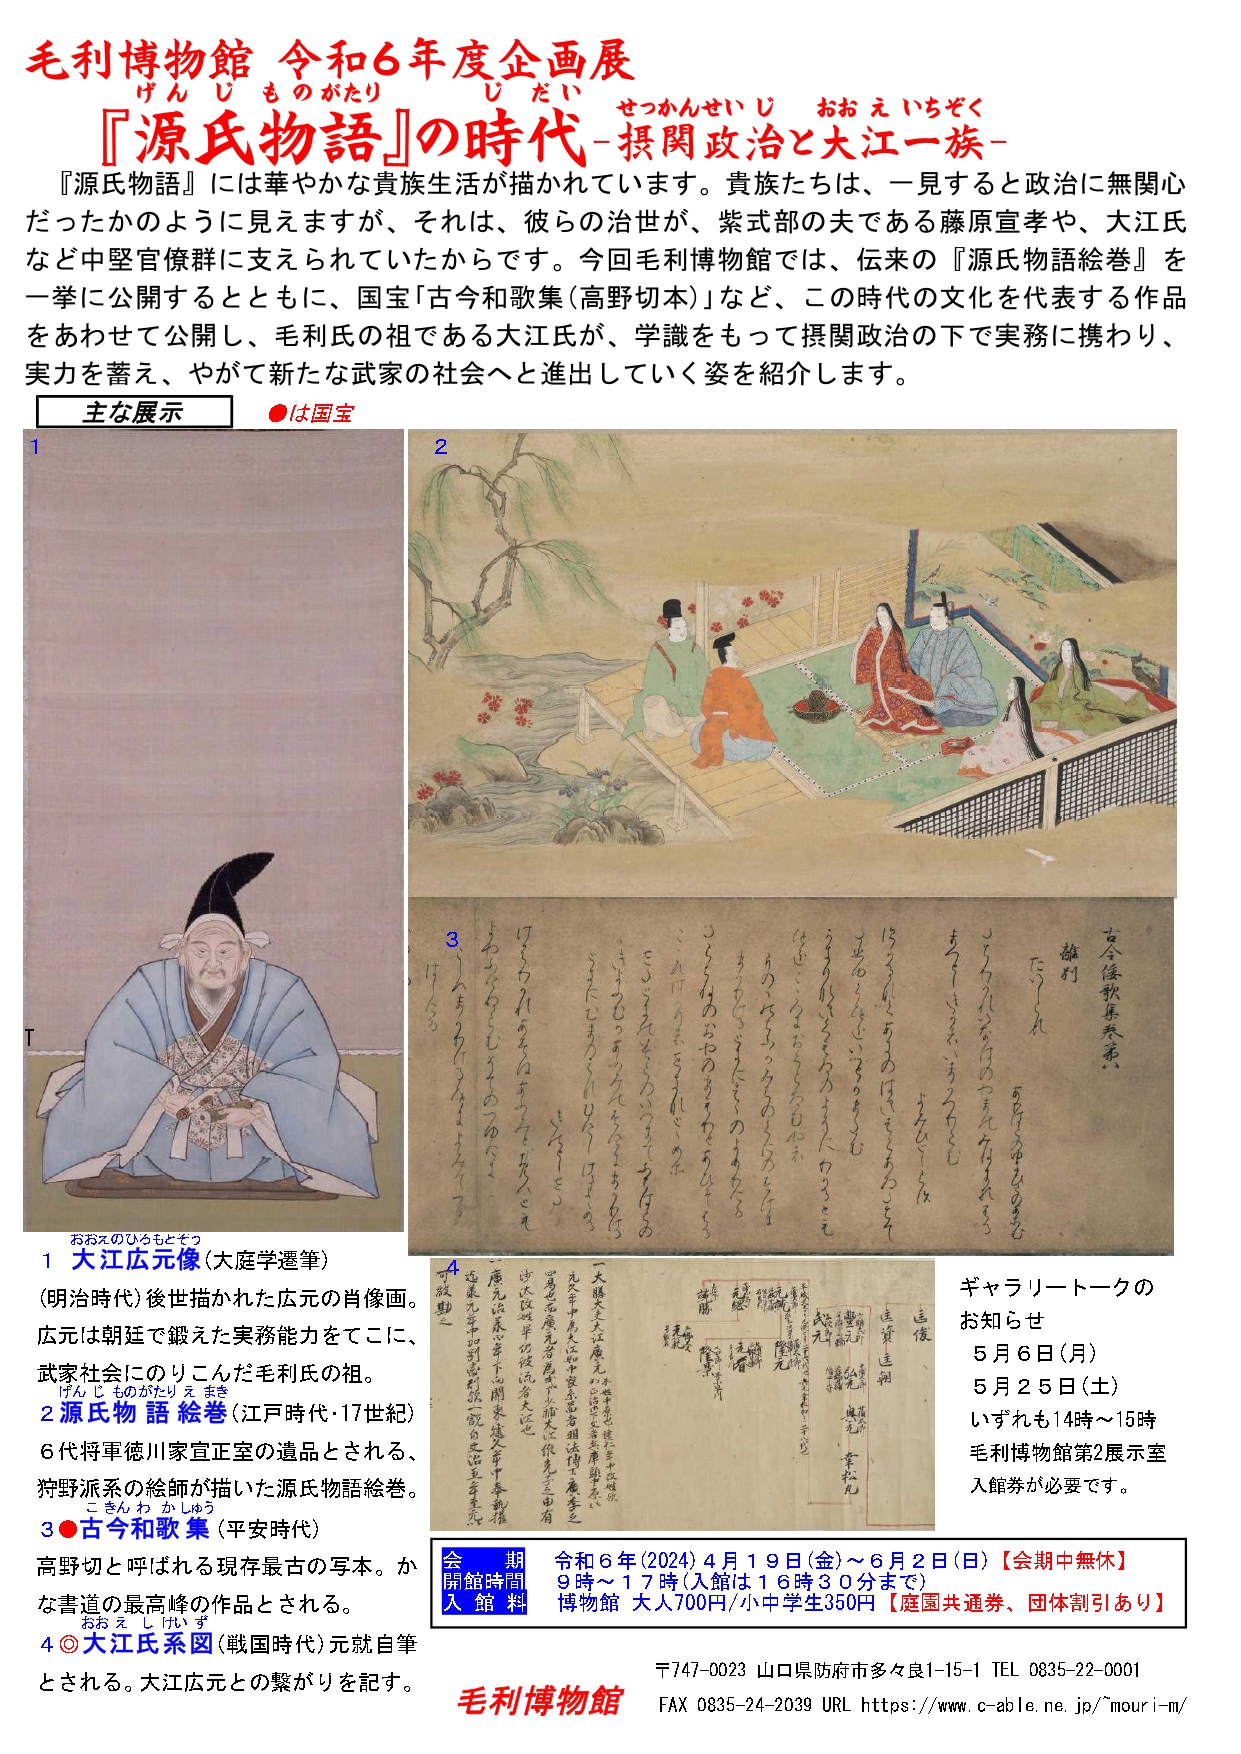 企画展「『源氏物語』 の時代 －摂関政治と大江一族－」資料